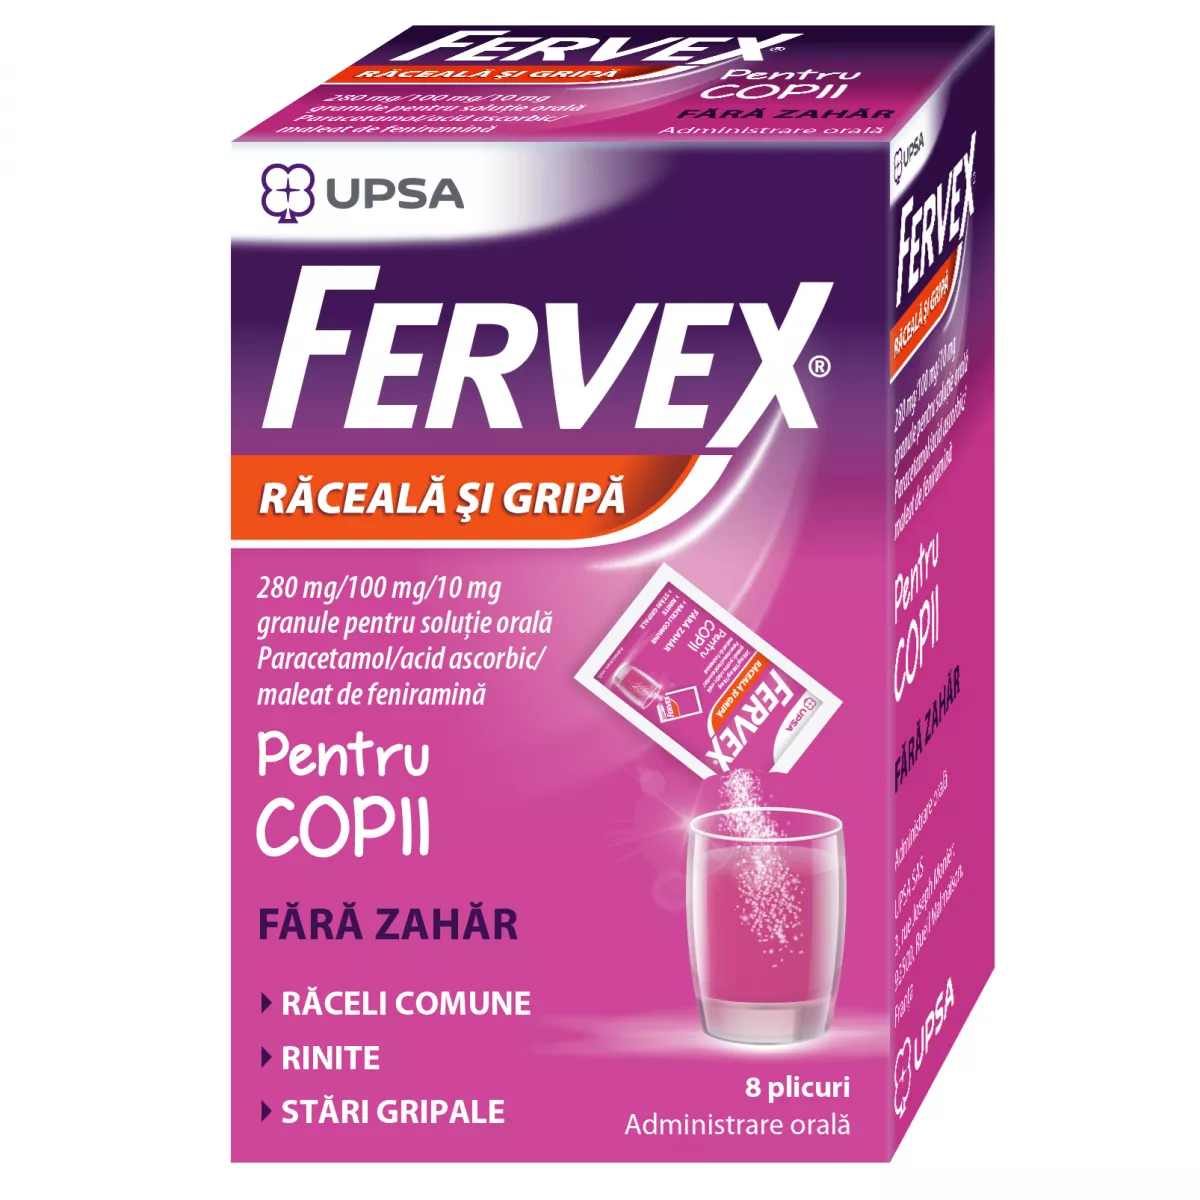 Fervex Raceala si Gripa fara zahar pentru copii, 280mg/100 mg/10 mg, 8 plicuri, Upsa, [],nordpharm.ro